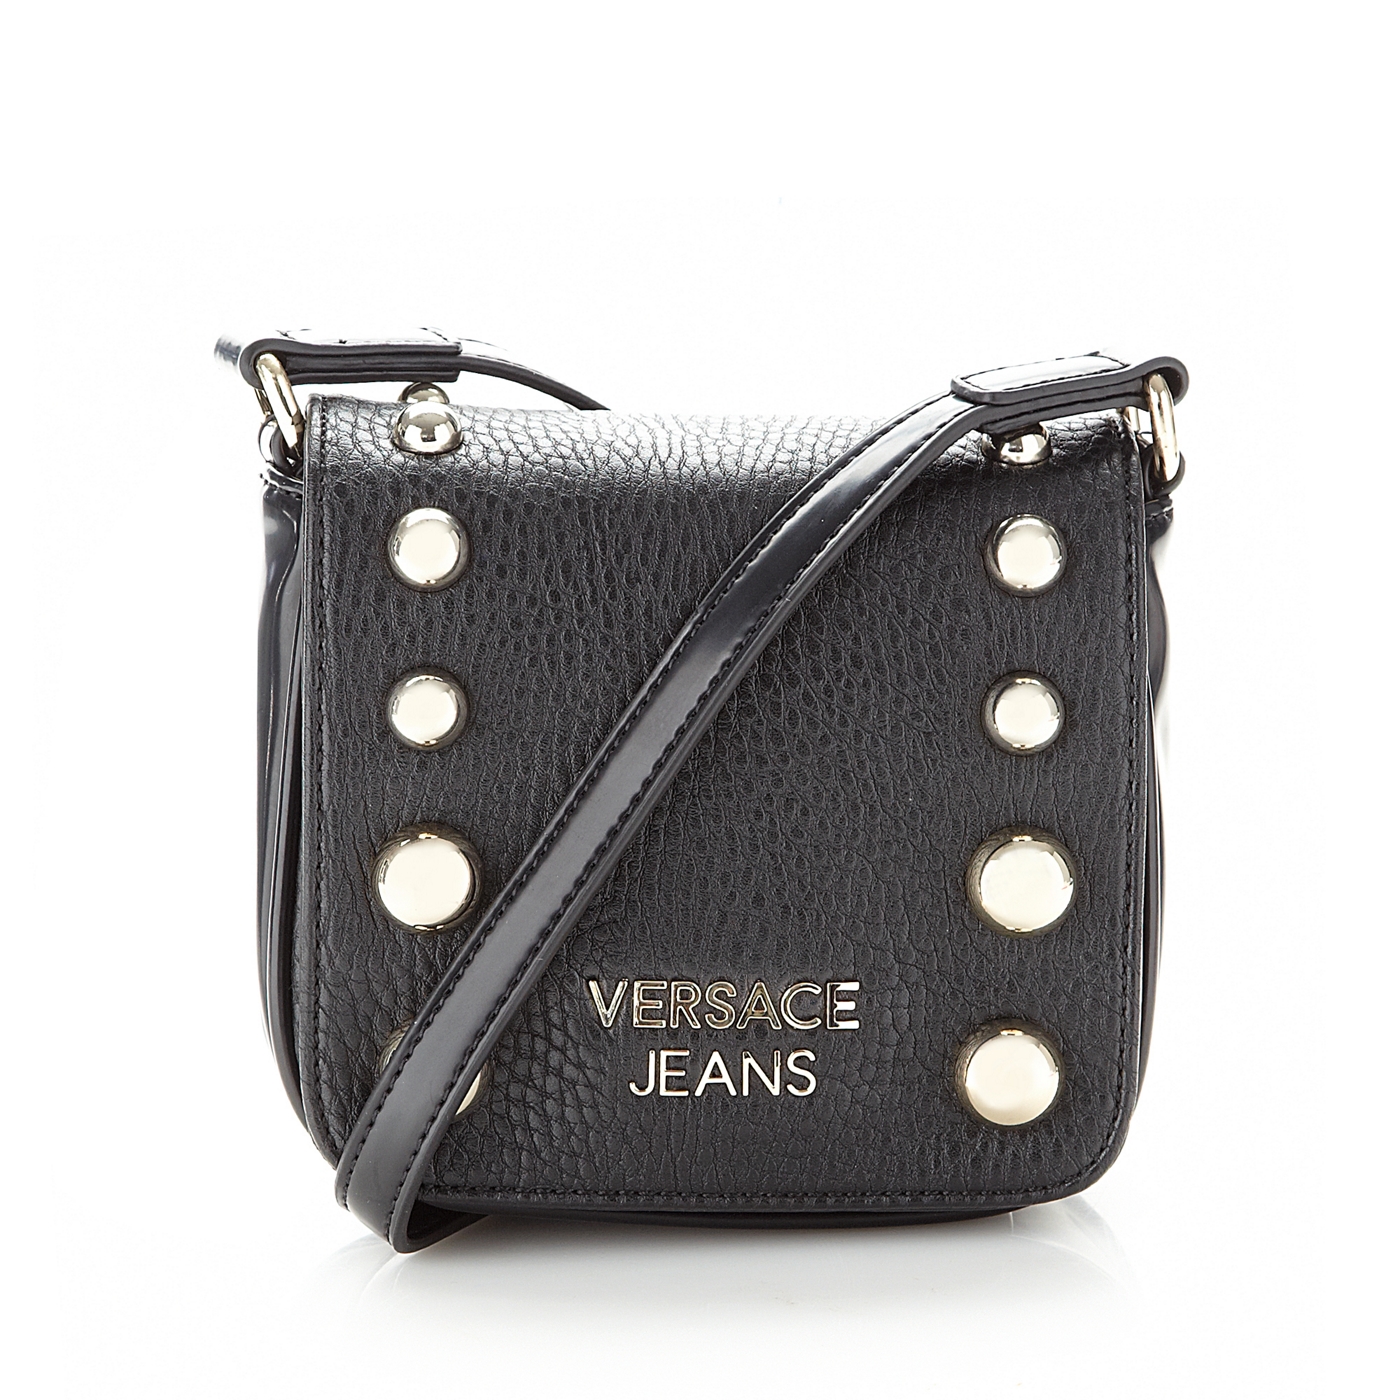 Versace Jeans Black studded mini cross body bag